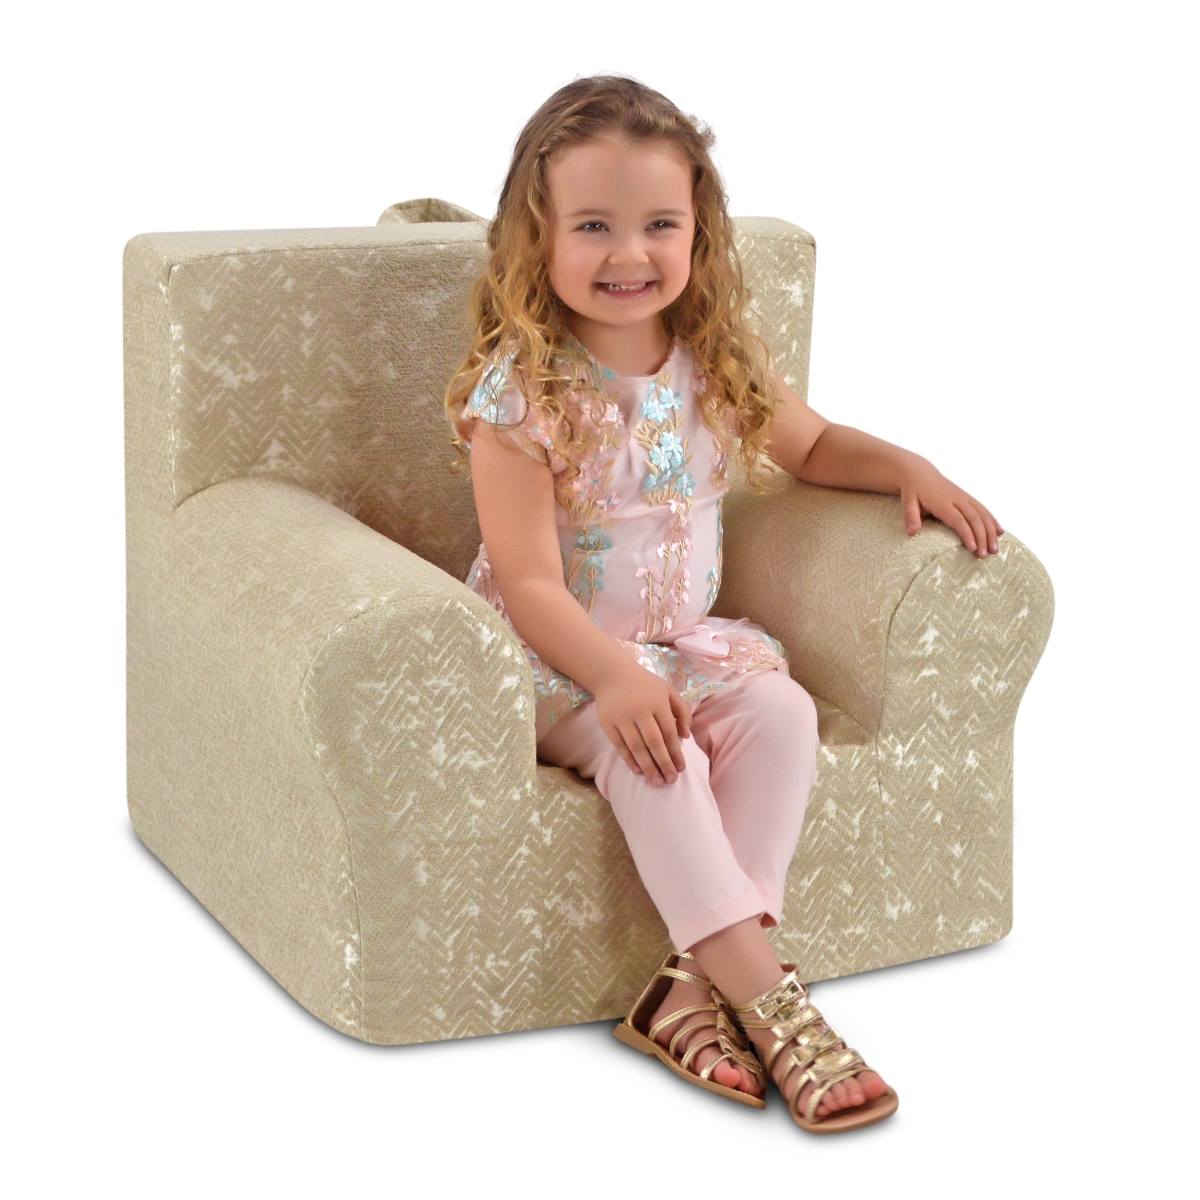 Weston Kids Grab-n-go Foam Chair With Handle - Limerick White Pepper, Ivory